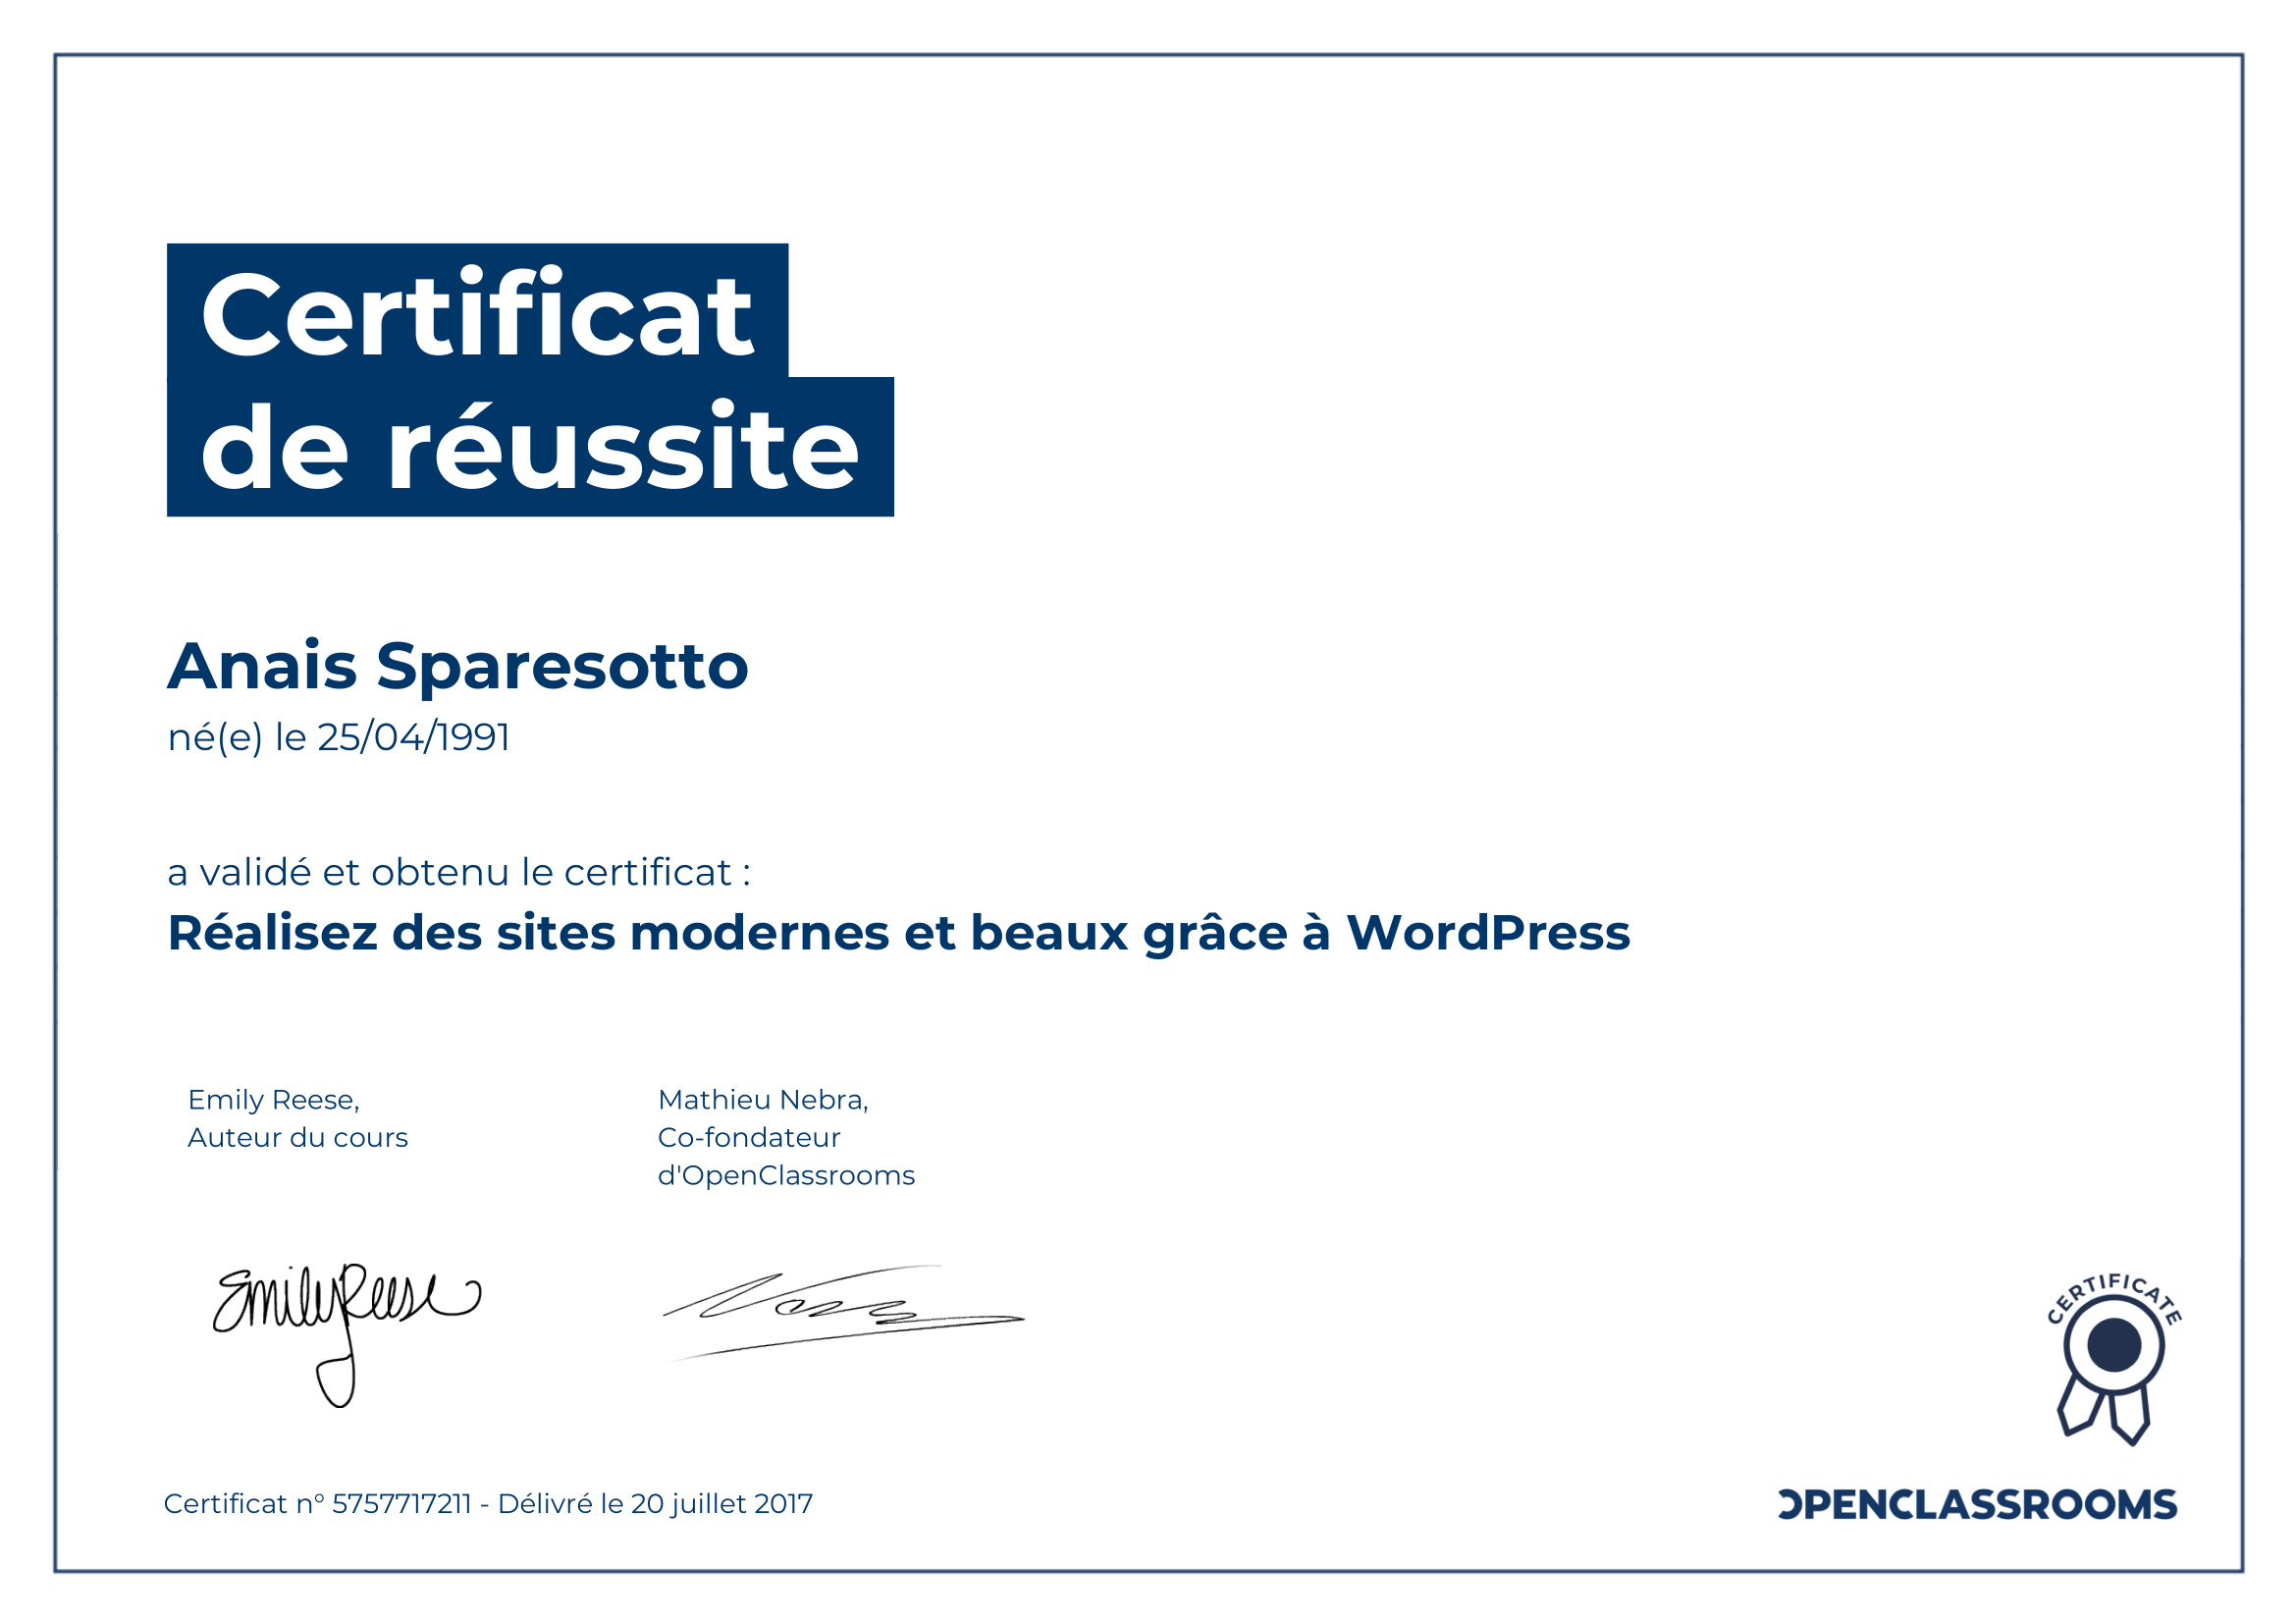 certificat de réussite cms wordpress sparesotto anais